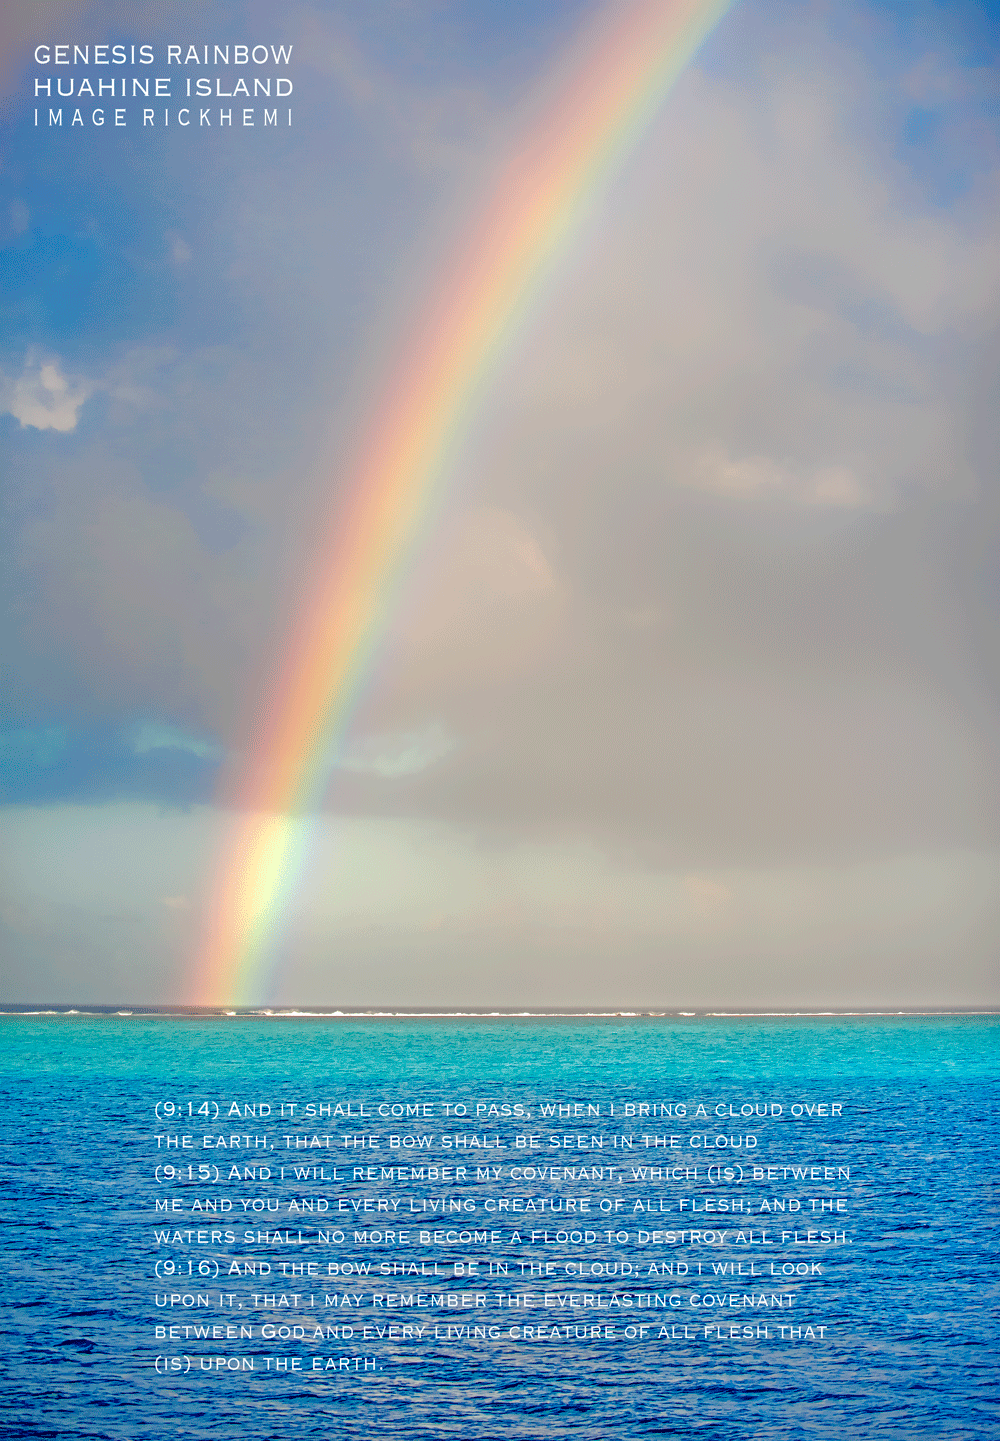 rainbow arc, DSLR image by Rick Hemi